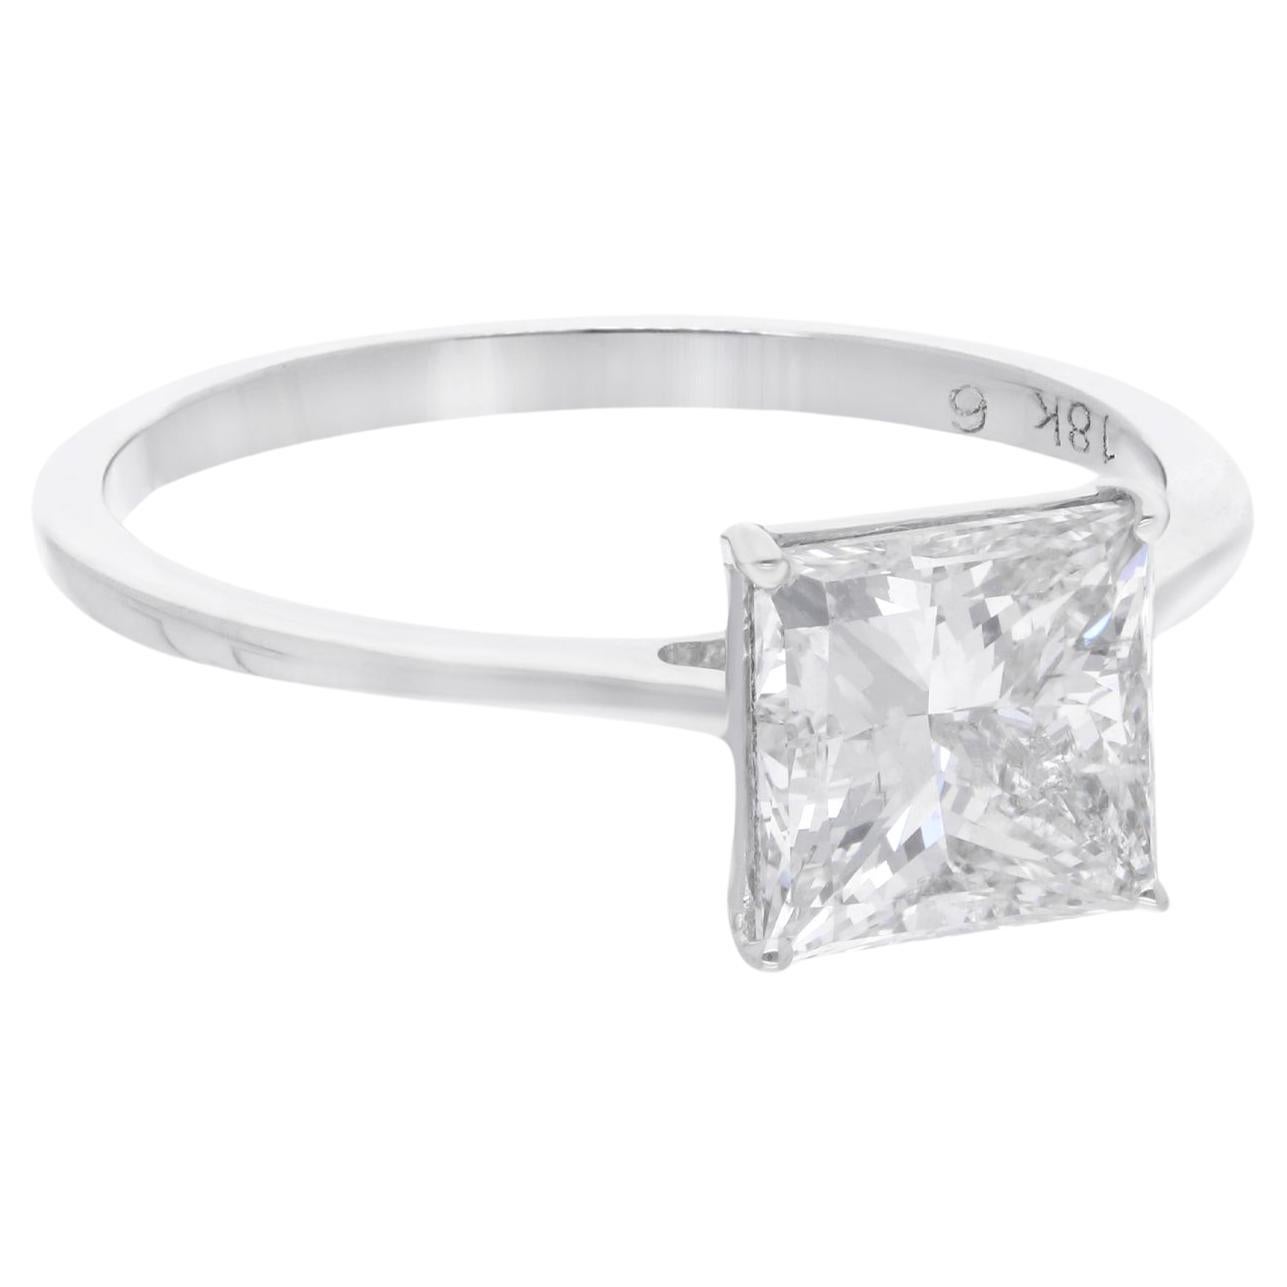 Solitaire Princess Cut Diamond Wedding Ring 18 Karat White Gold Handmade Jewelry